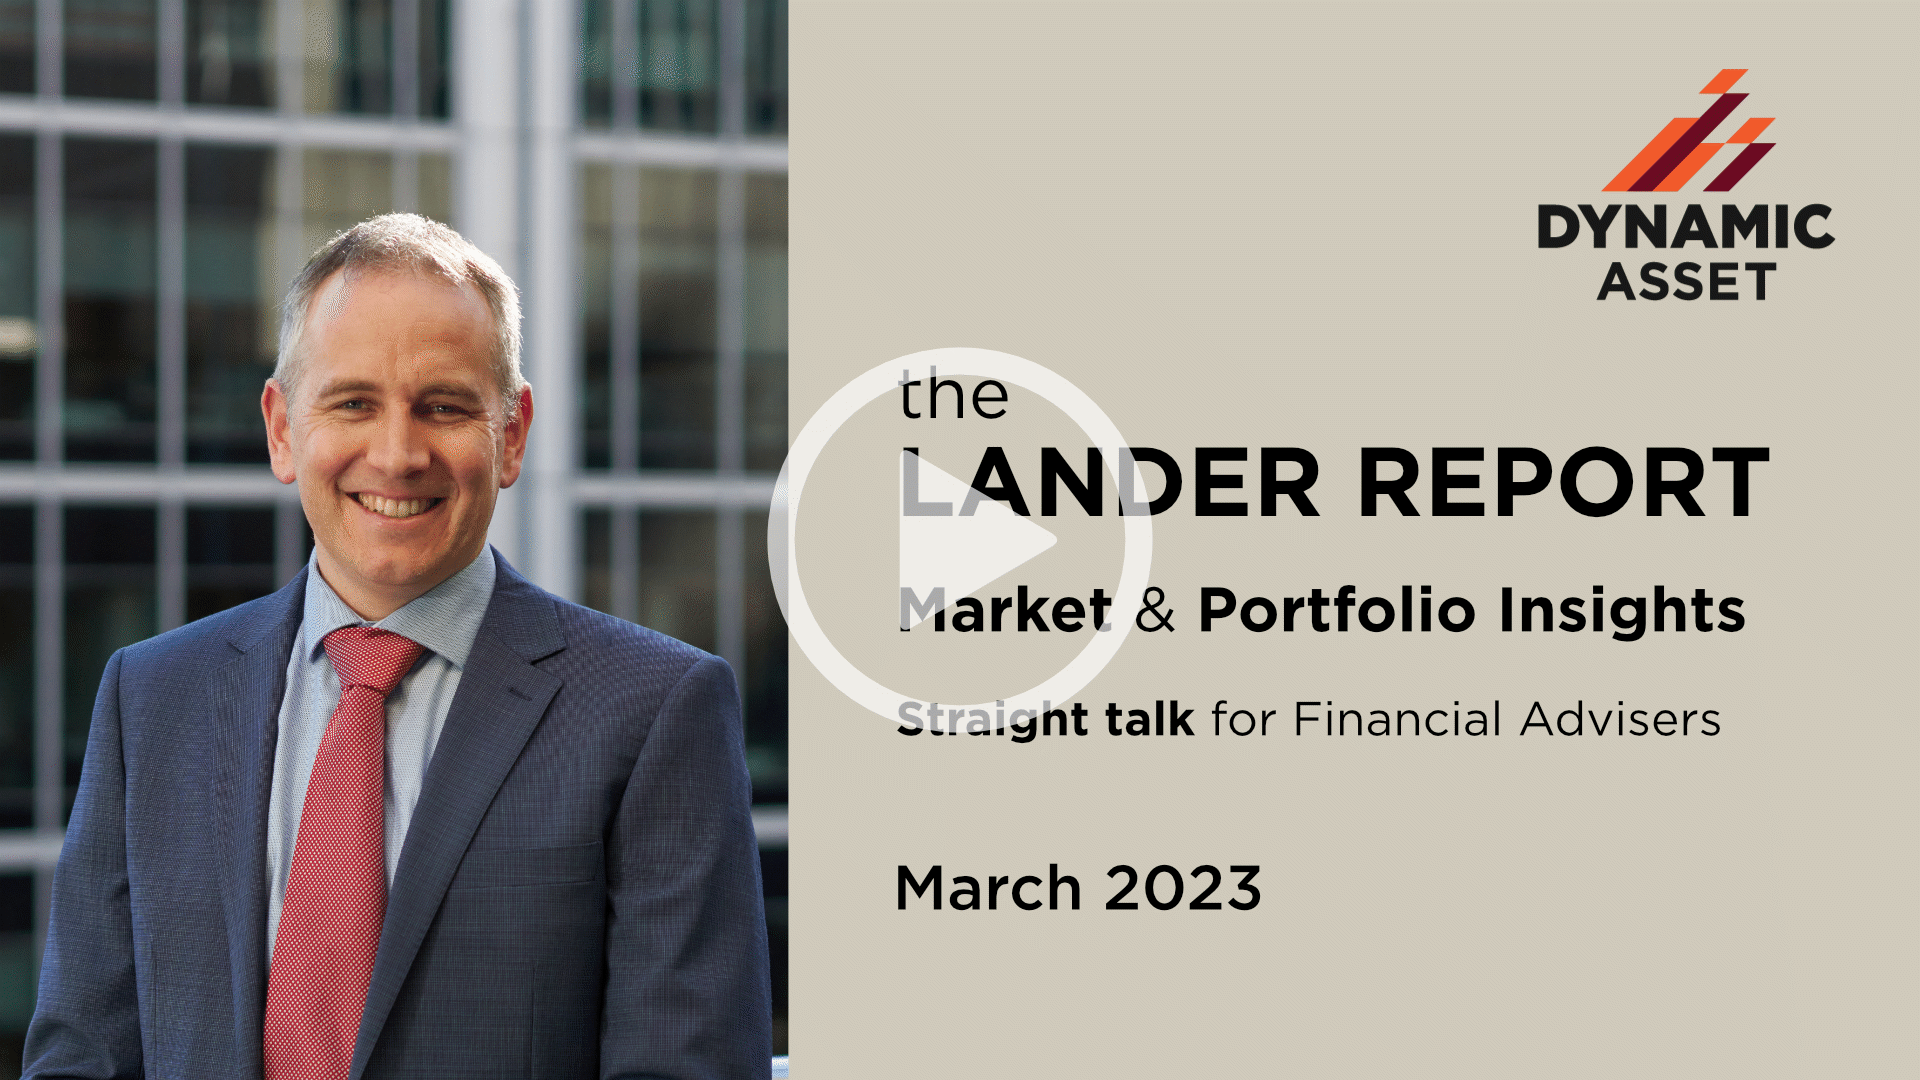 The Lander Report - Market & Portfolio Insights